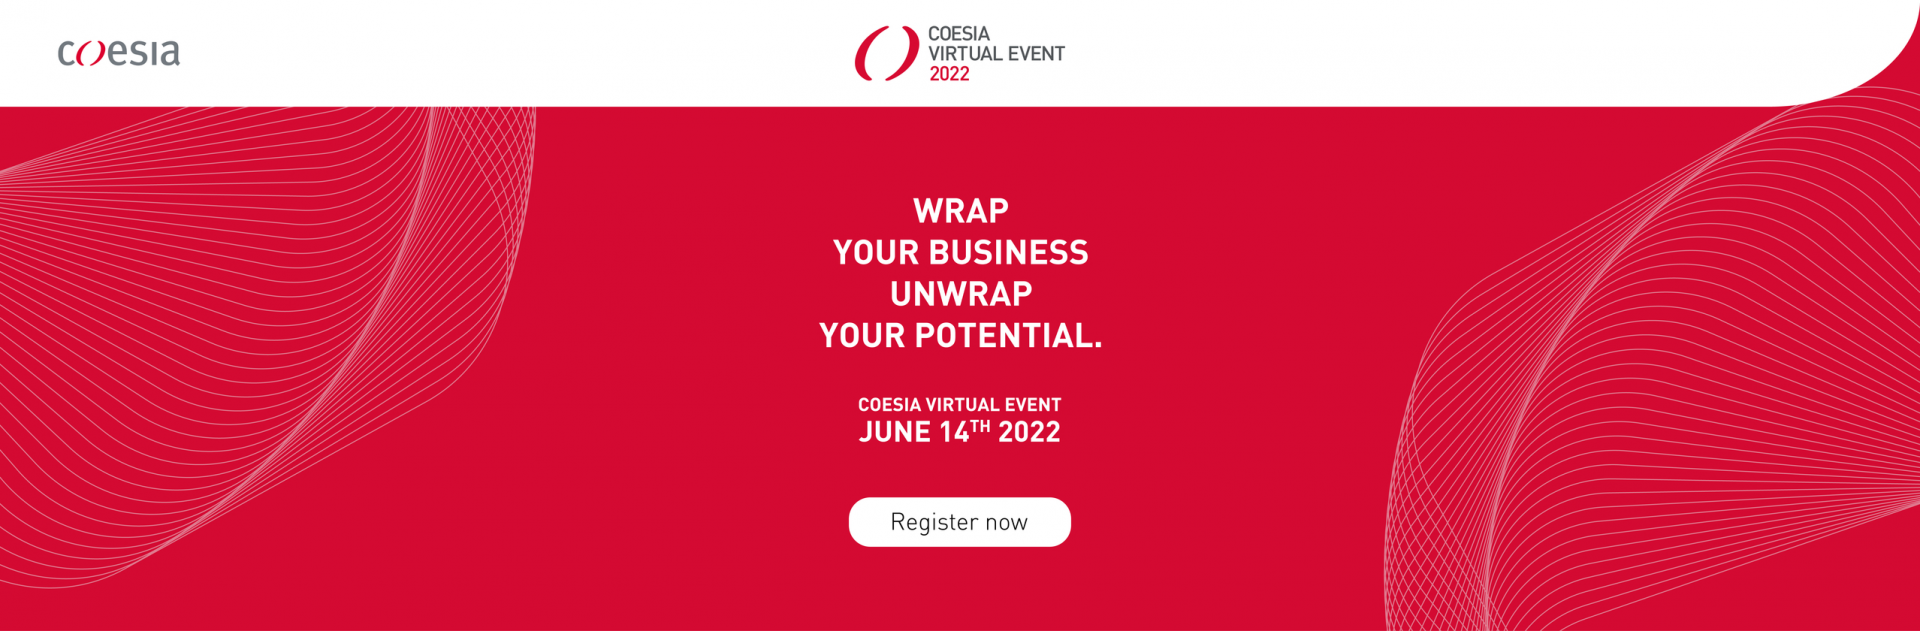 Coesia Virtual Event